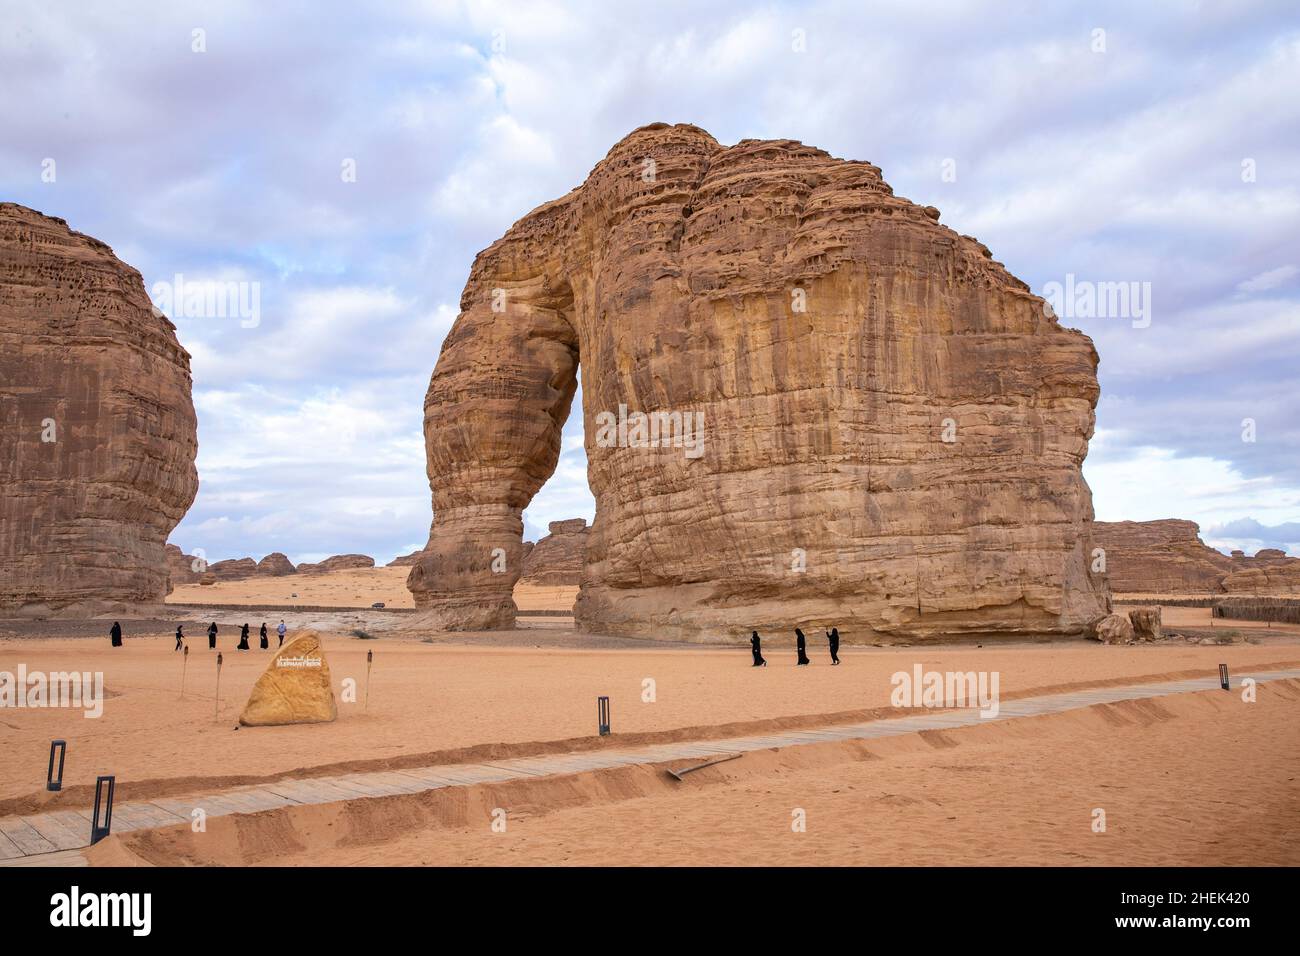 Famoso Elephant Rock en Al Ula, Arabia Saudita Foto de stock